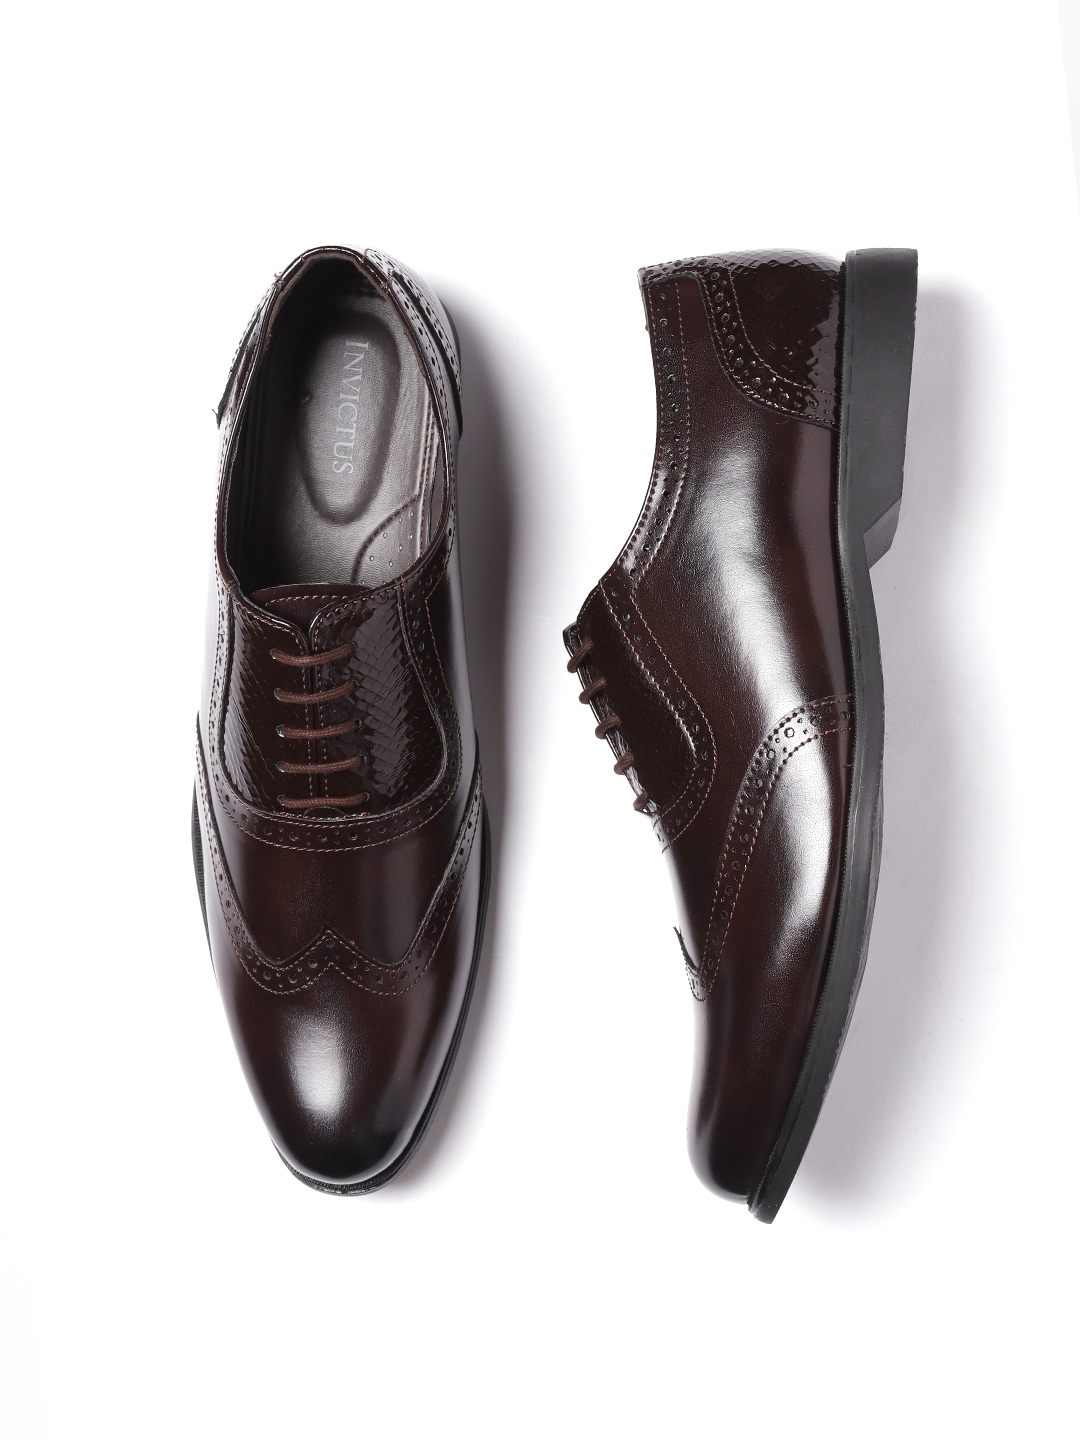 myntra black formal shoes